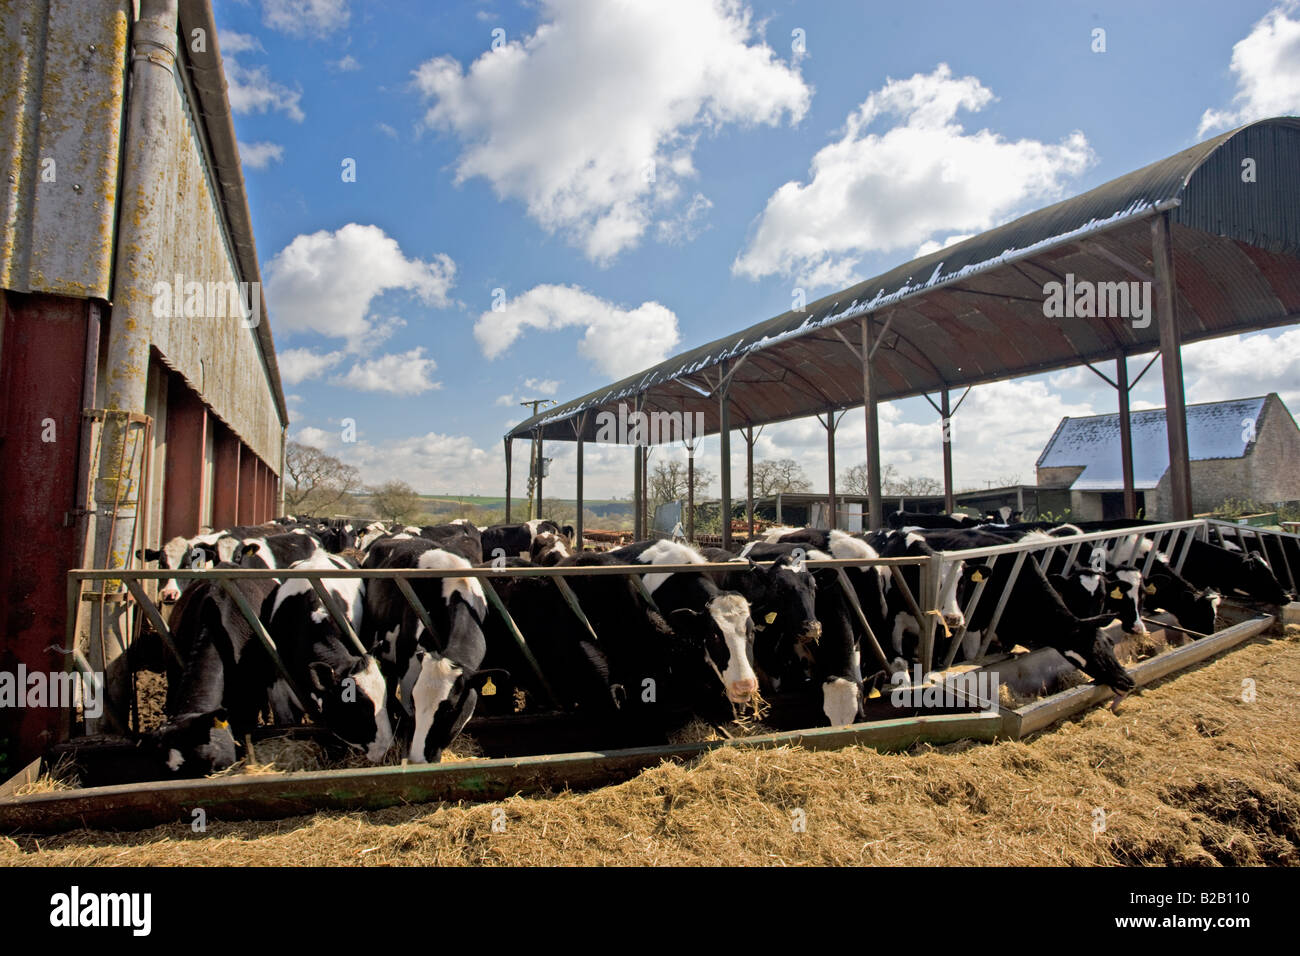 https://c8.alamy.com/comp/B2B110/cows-feeding-from-trough-in-a-cattle-pen-sherborne-gloucestershire-B2B110.jpg